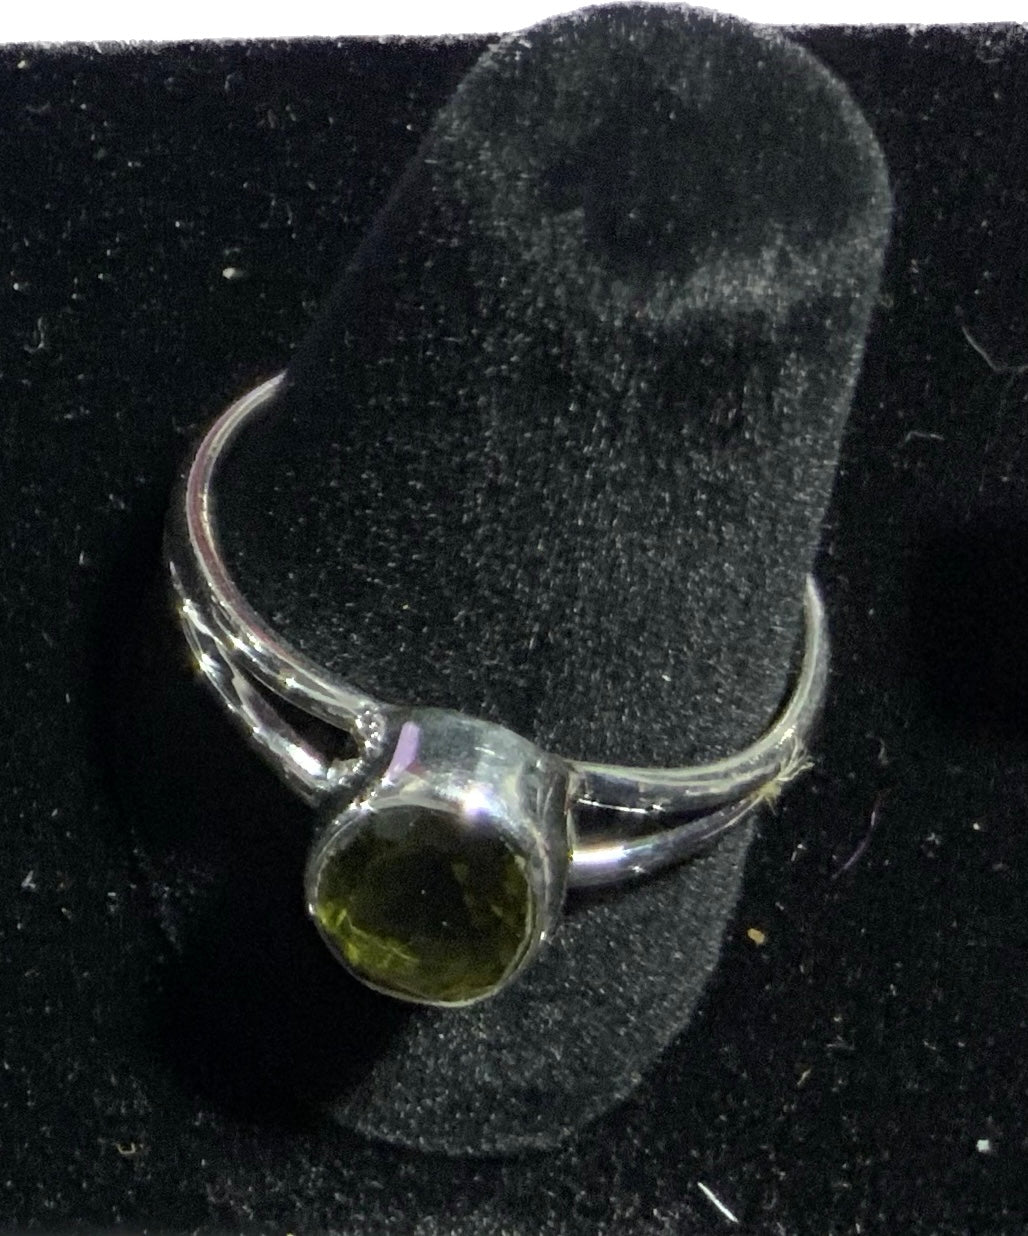 Stunning Moldavite Ring Size 8